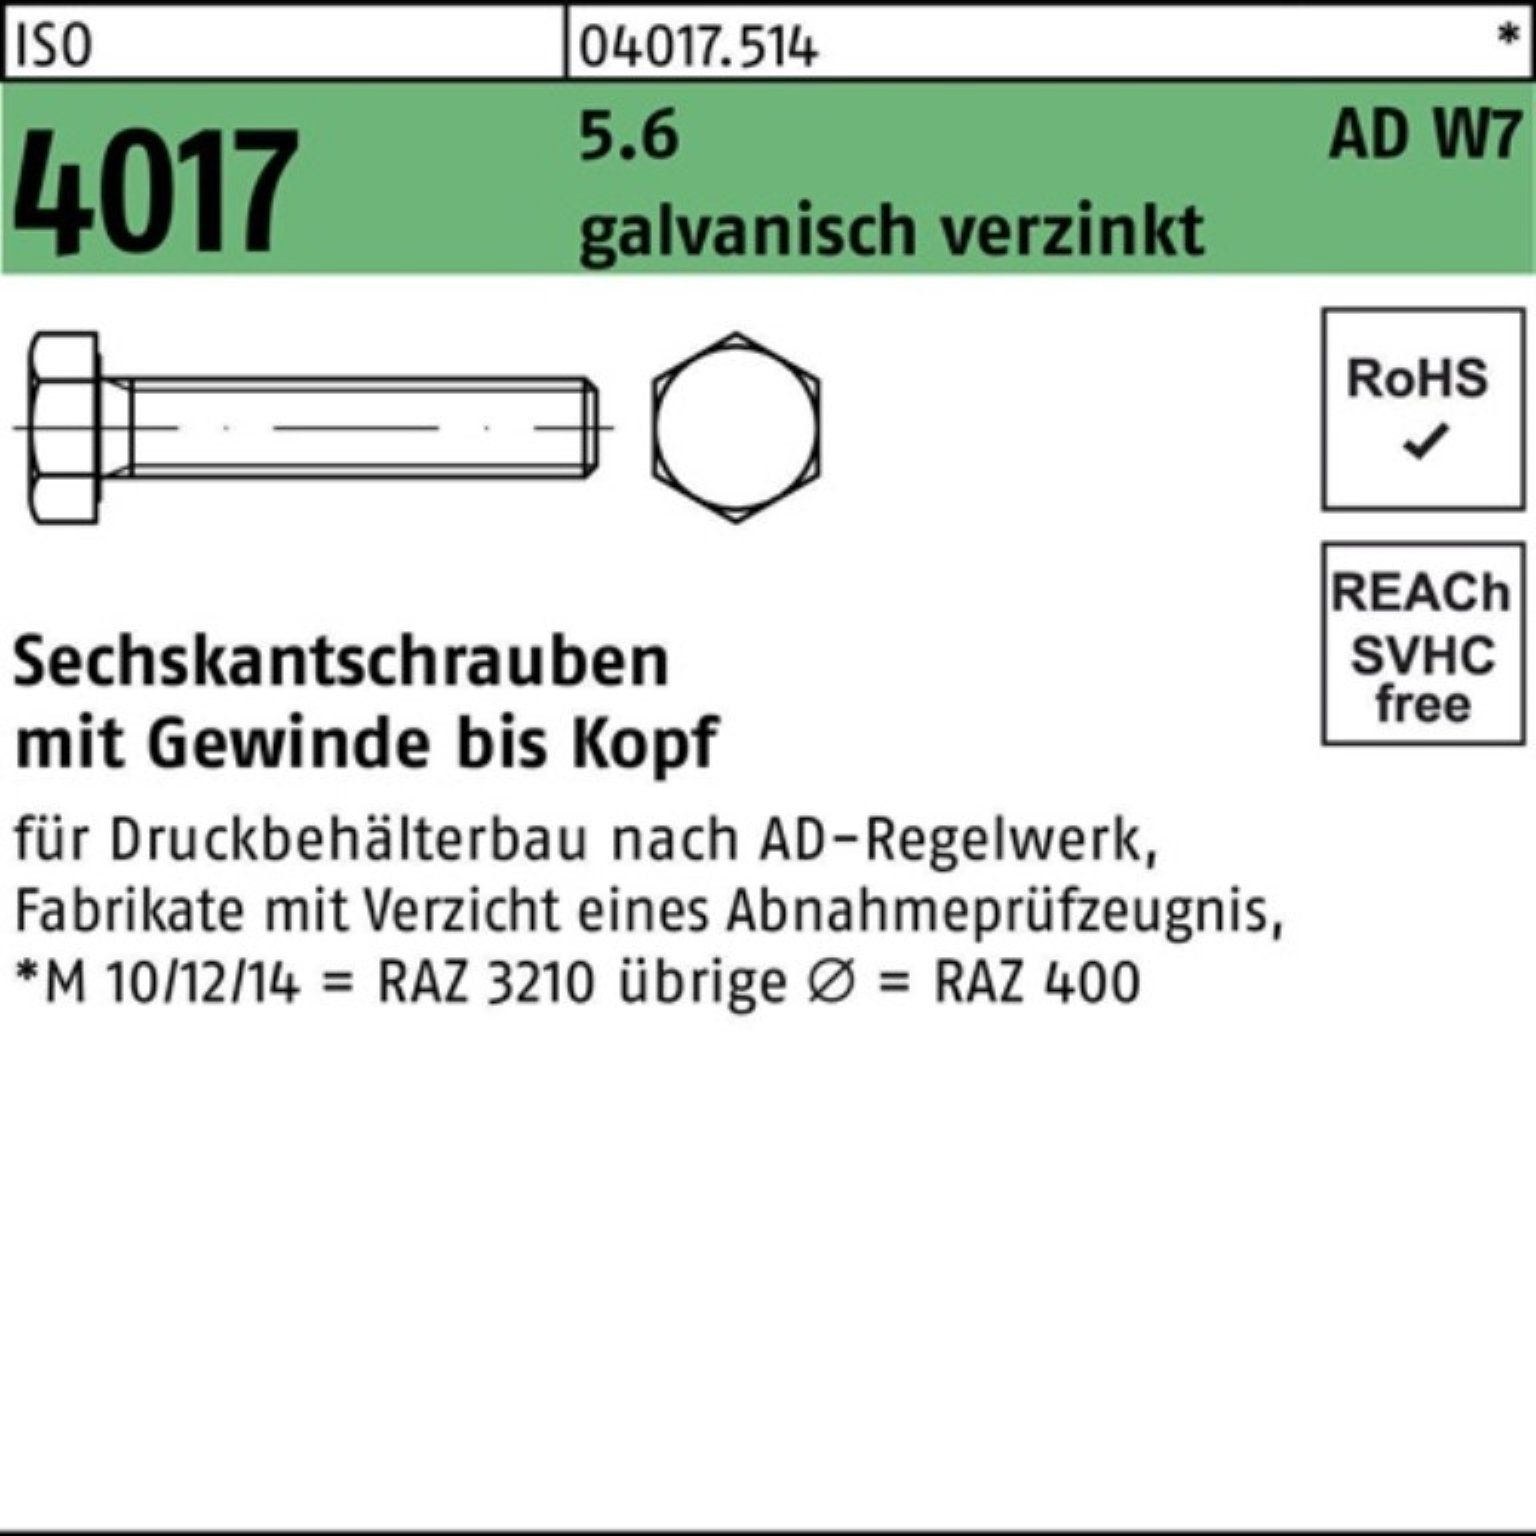 Sechskantschraube galv.verz. 100er VG 60 Sechskantschraube AD Pack 5.6 W7 ISO Bufab 4017 M20x